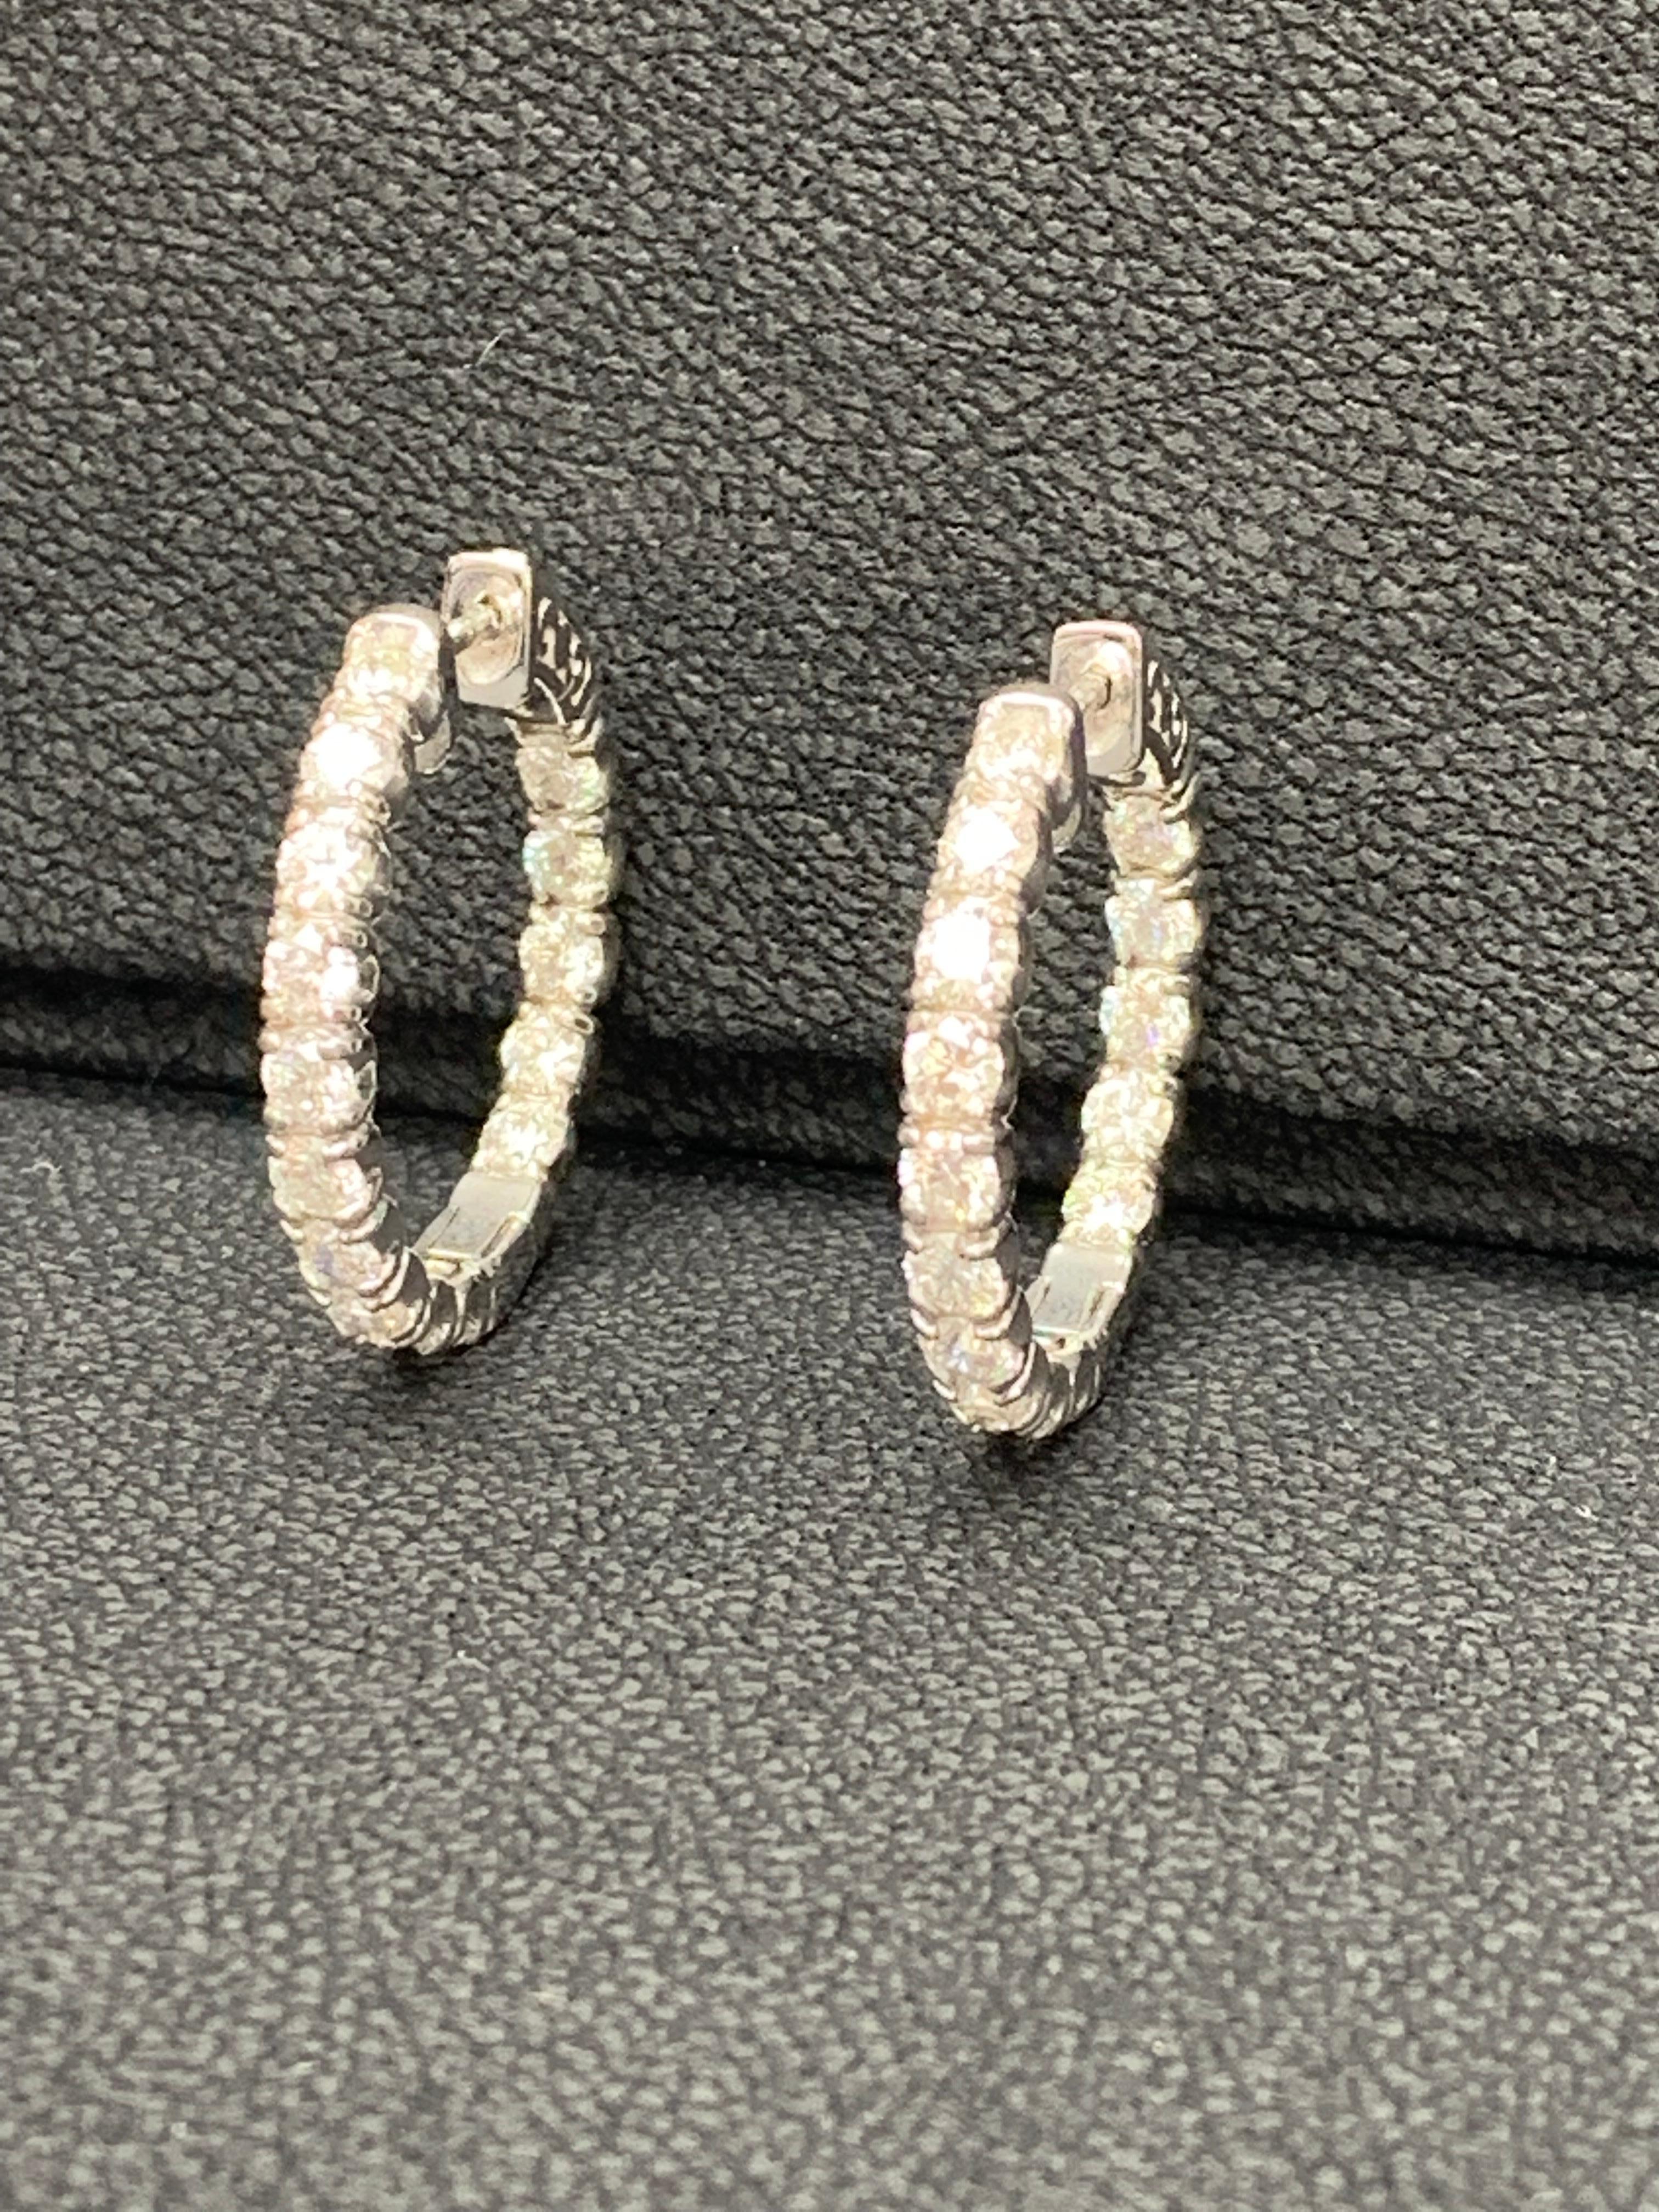 3.01 Carat Diamond Hoop Earrings in 14k White Gold For Sale 1